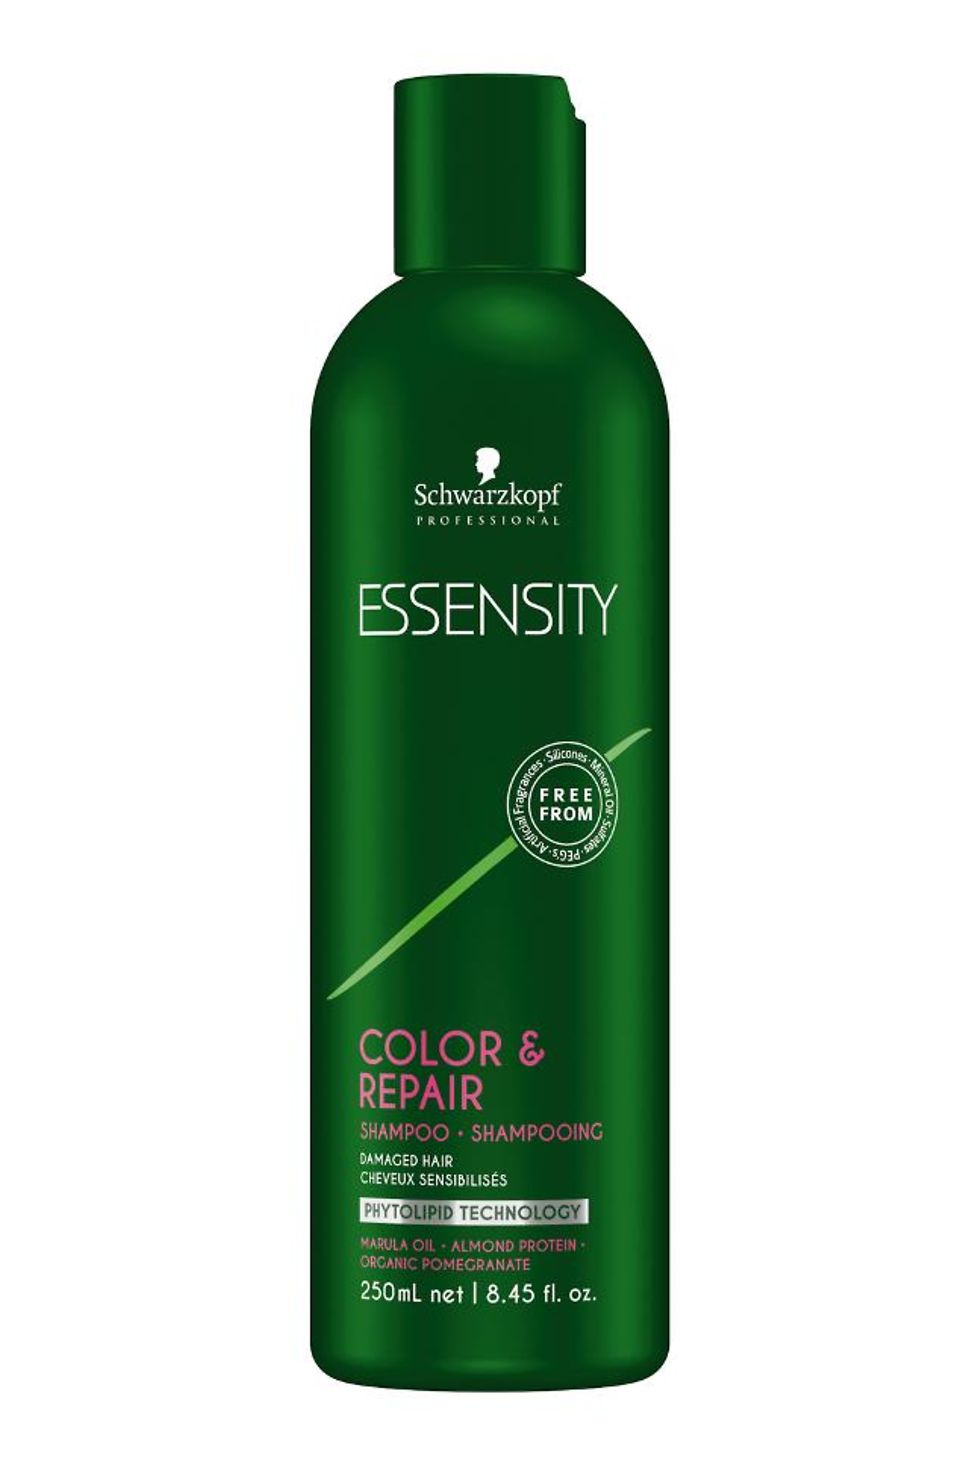 Essensity Color & Repair sulfatfreies Shampoo